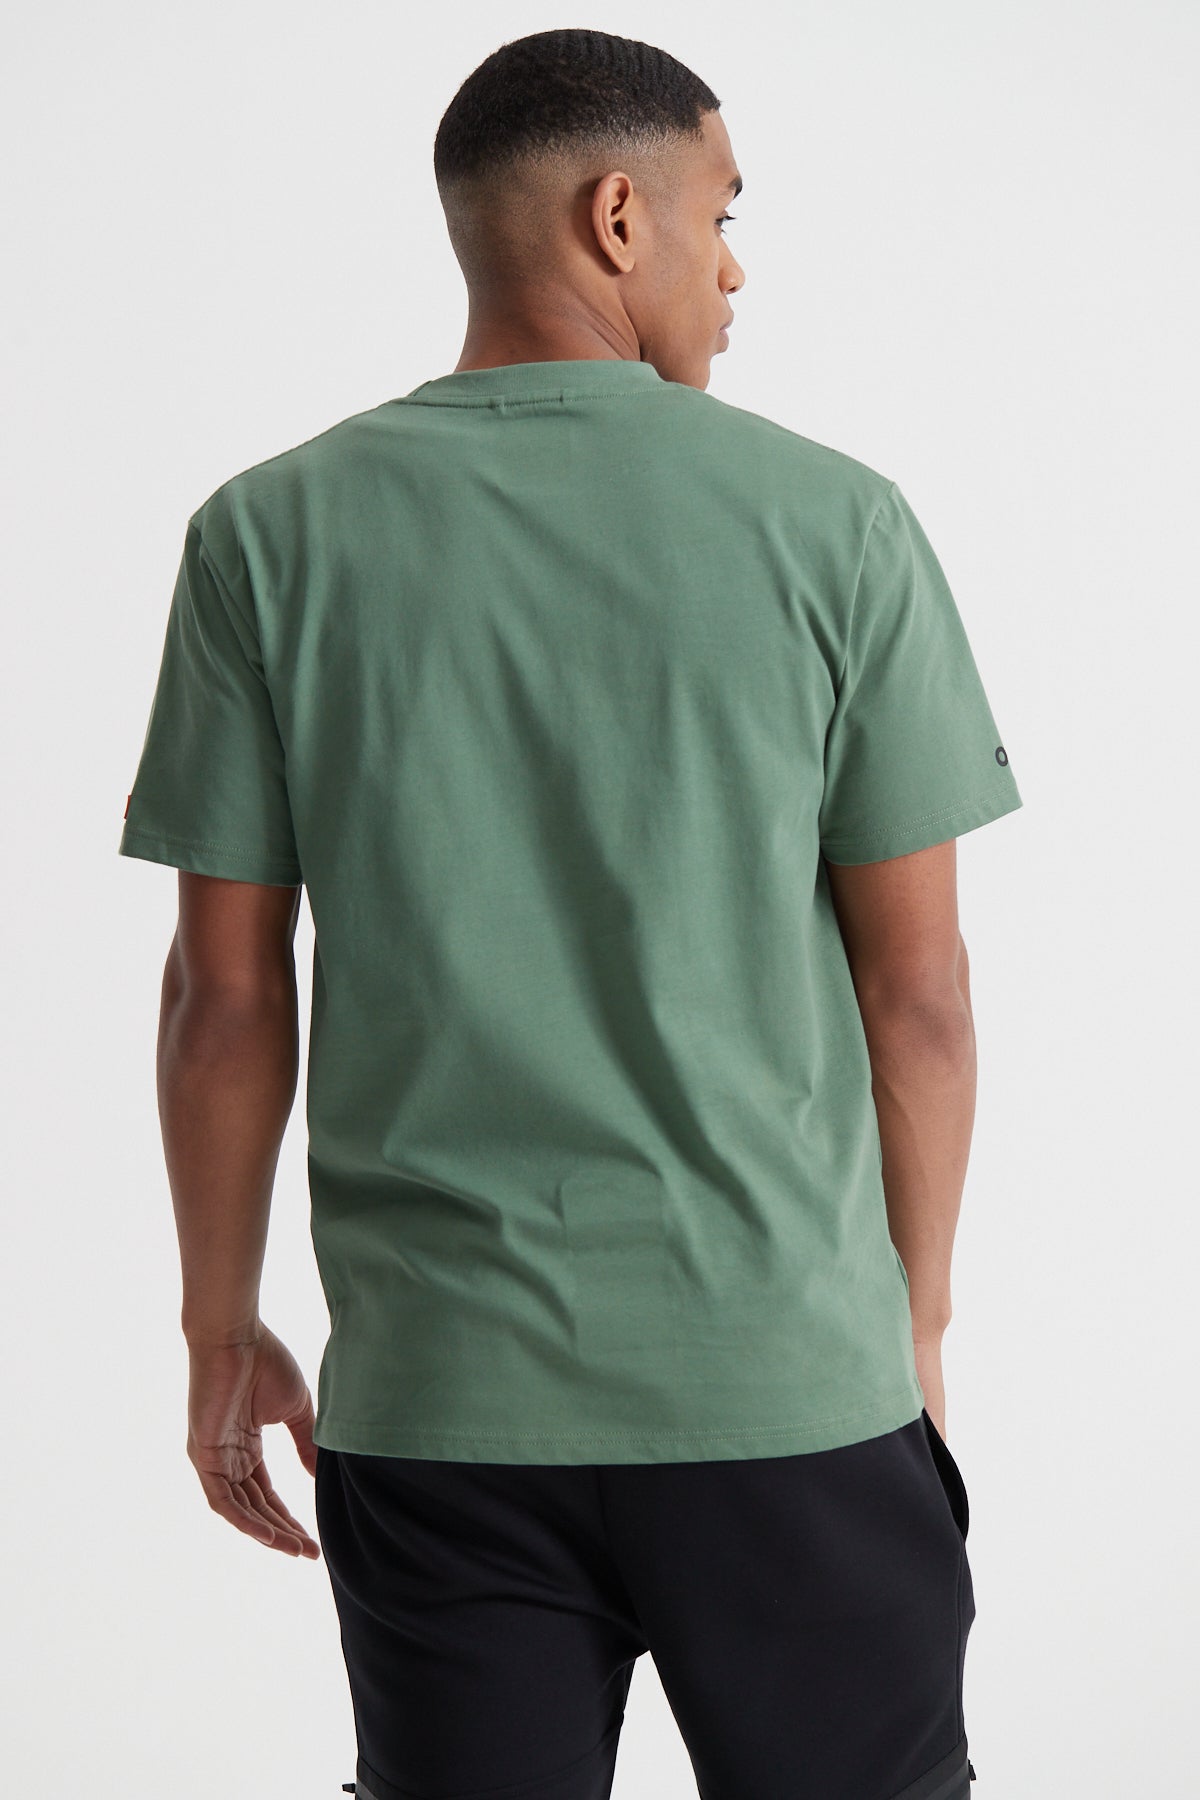 Off The Grid T-shirt - Jungle Green